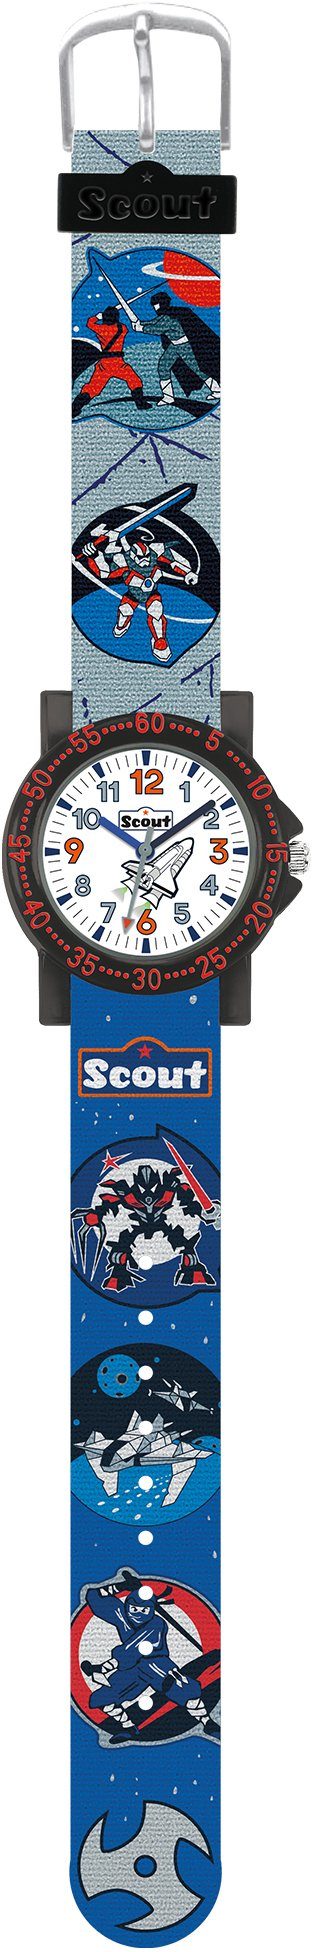 Scout Quarzuhr The IT-Collection, als auch Lernuhr, Geschenk 280375026, ideal